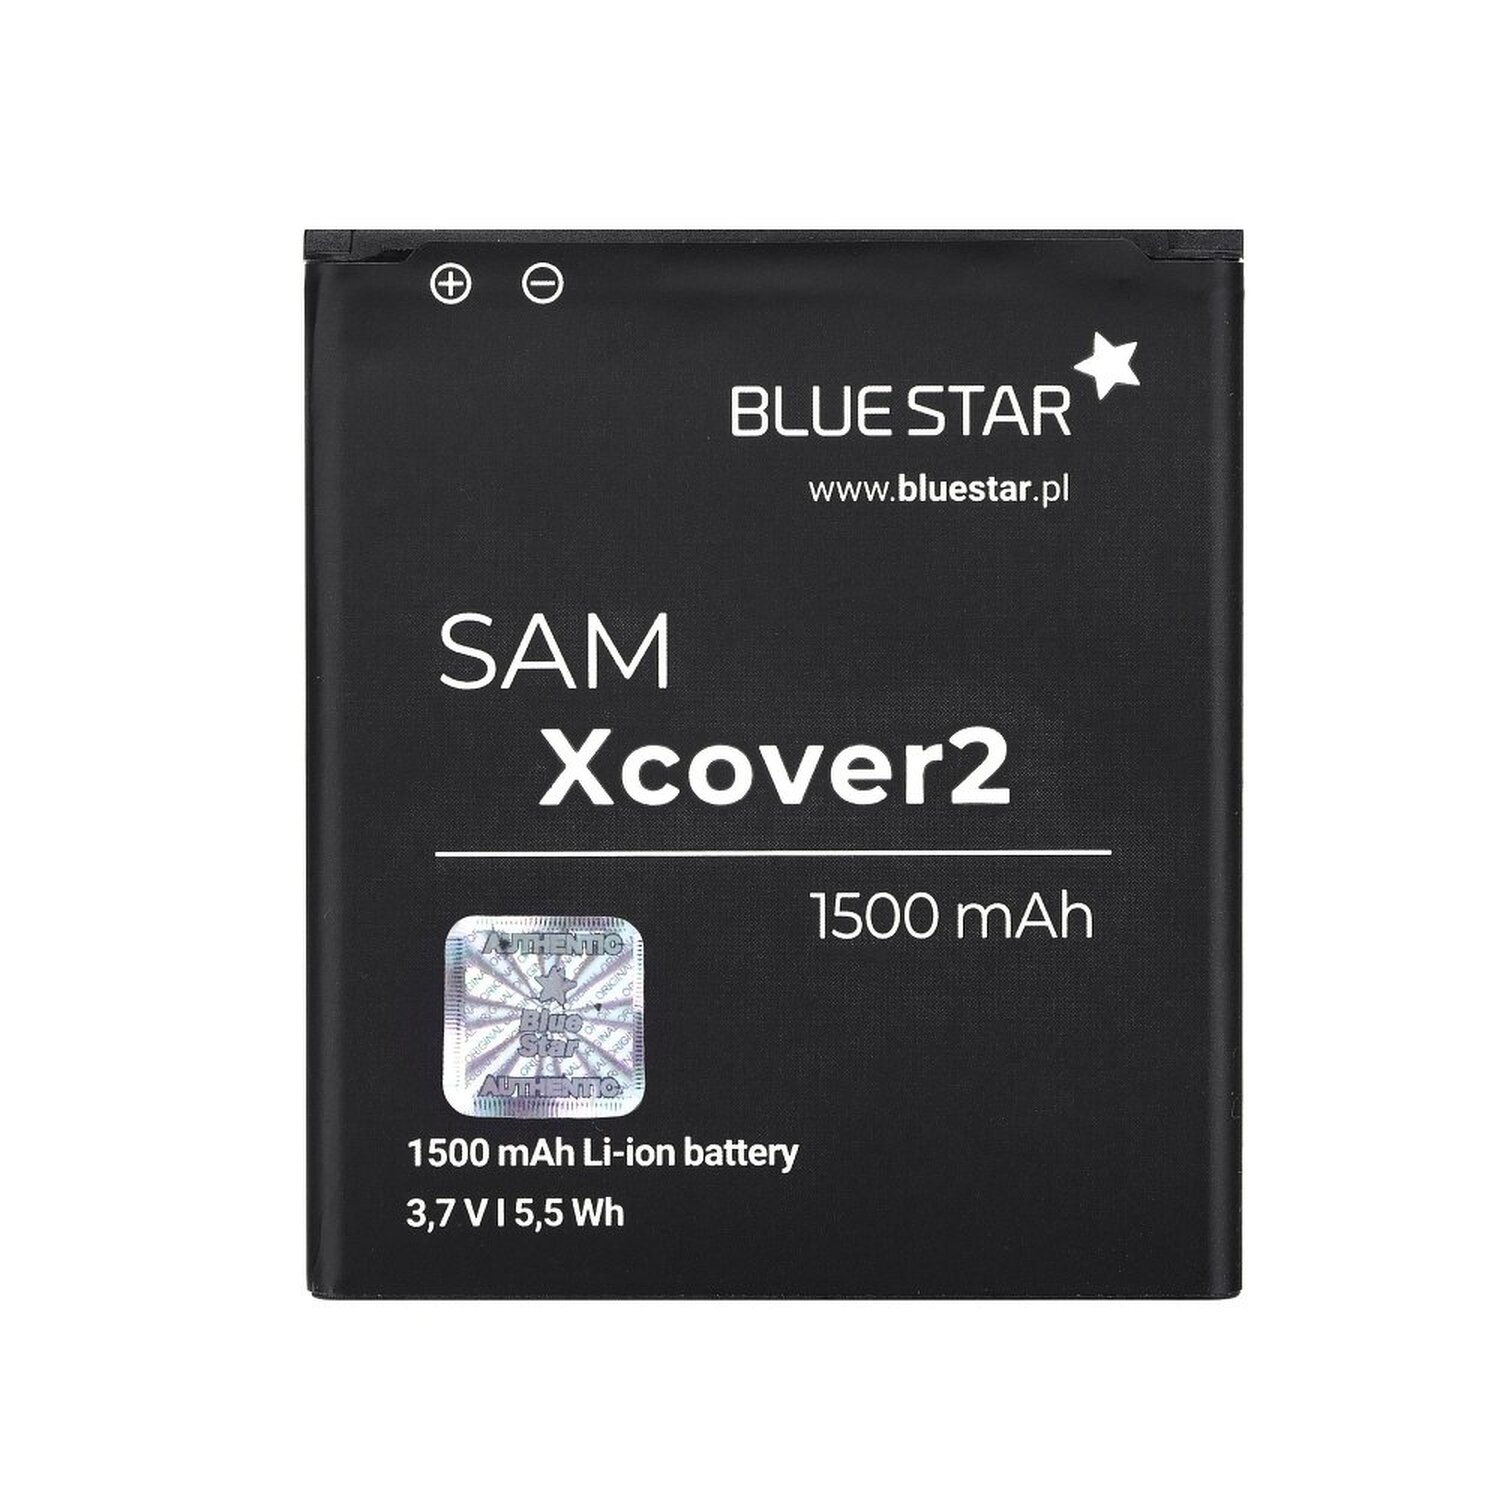 BLUESTAR Akku für Samsung Galaxy 2 Xcover Handyakku Li-Ion